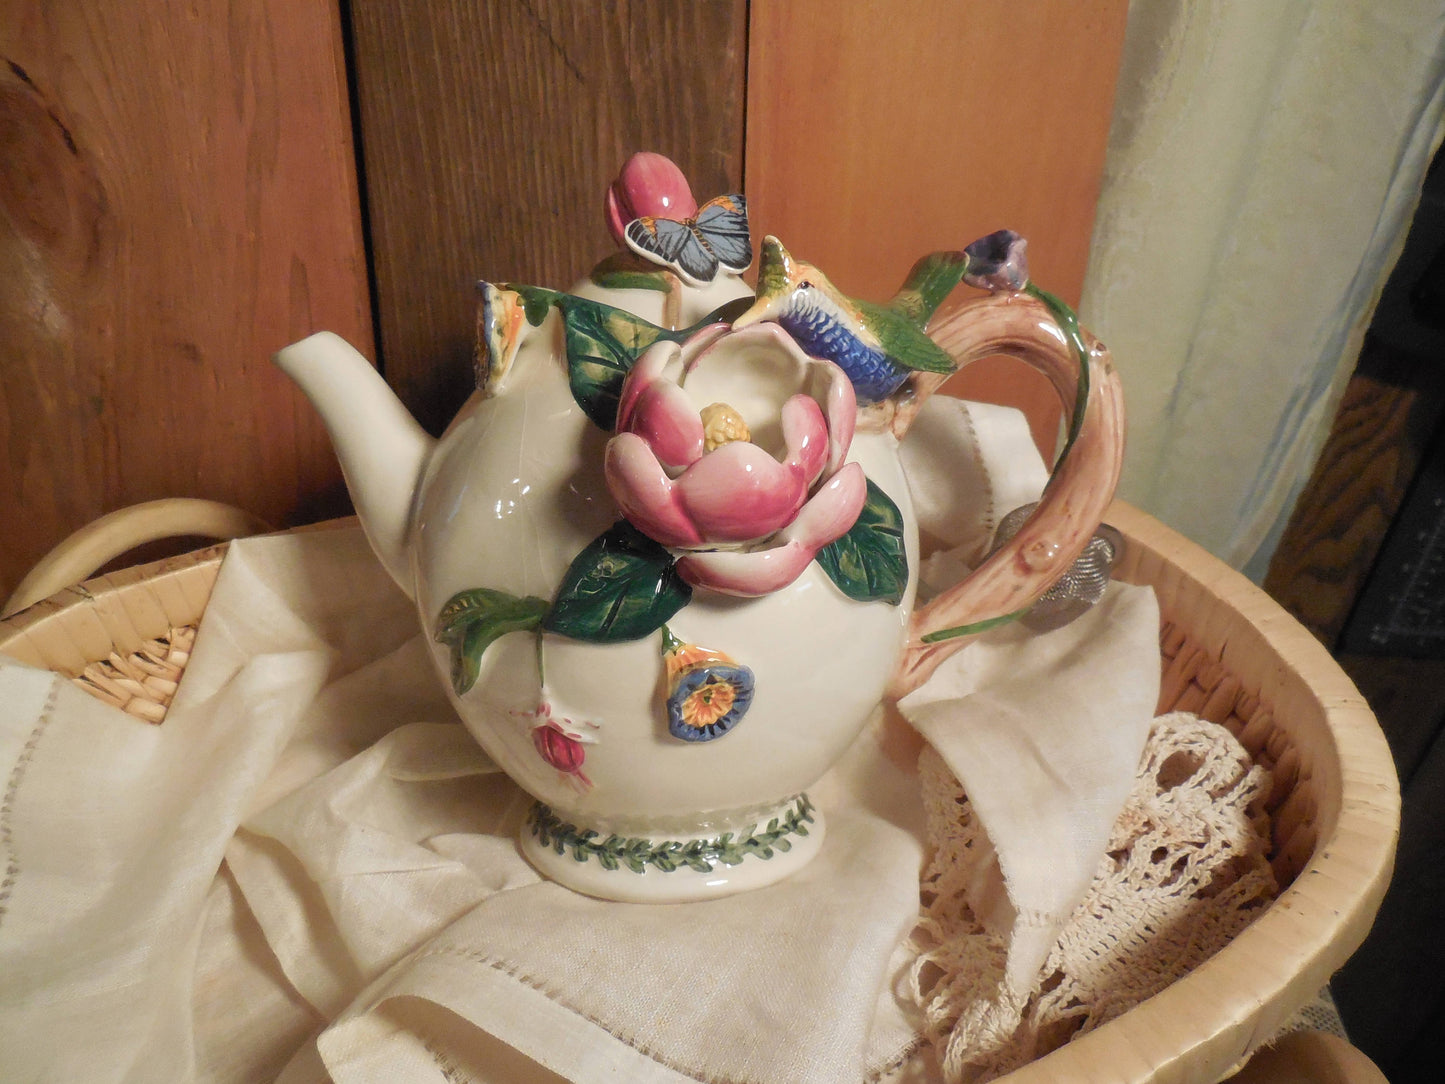 Teapot Gift Basket, Three-dimensional Floral Ceramic Tea Pot, scones, shortbread, herbal tea, infuser, gift set, basket tray